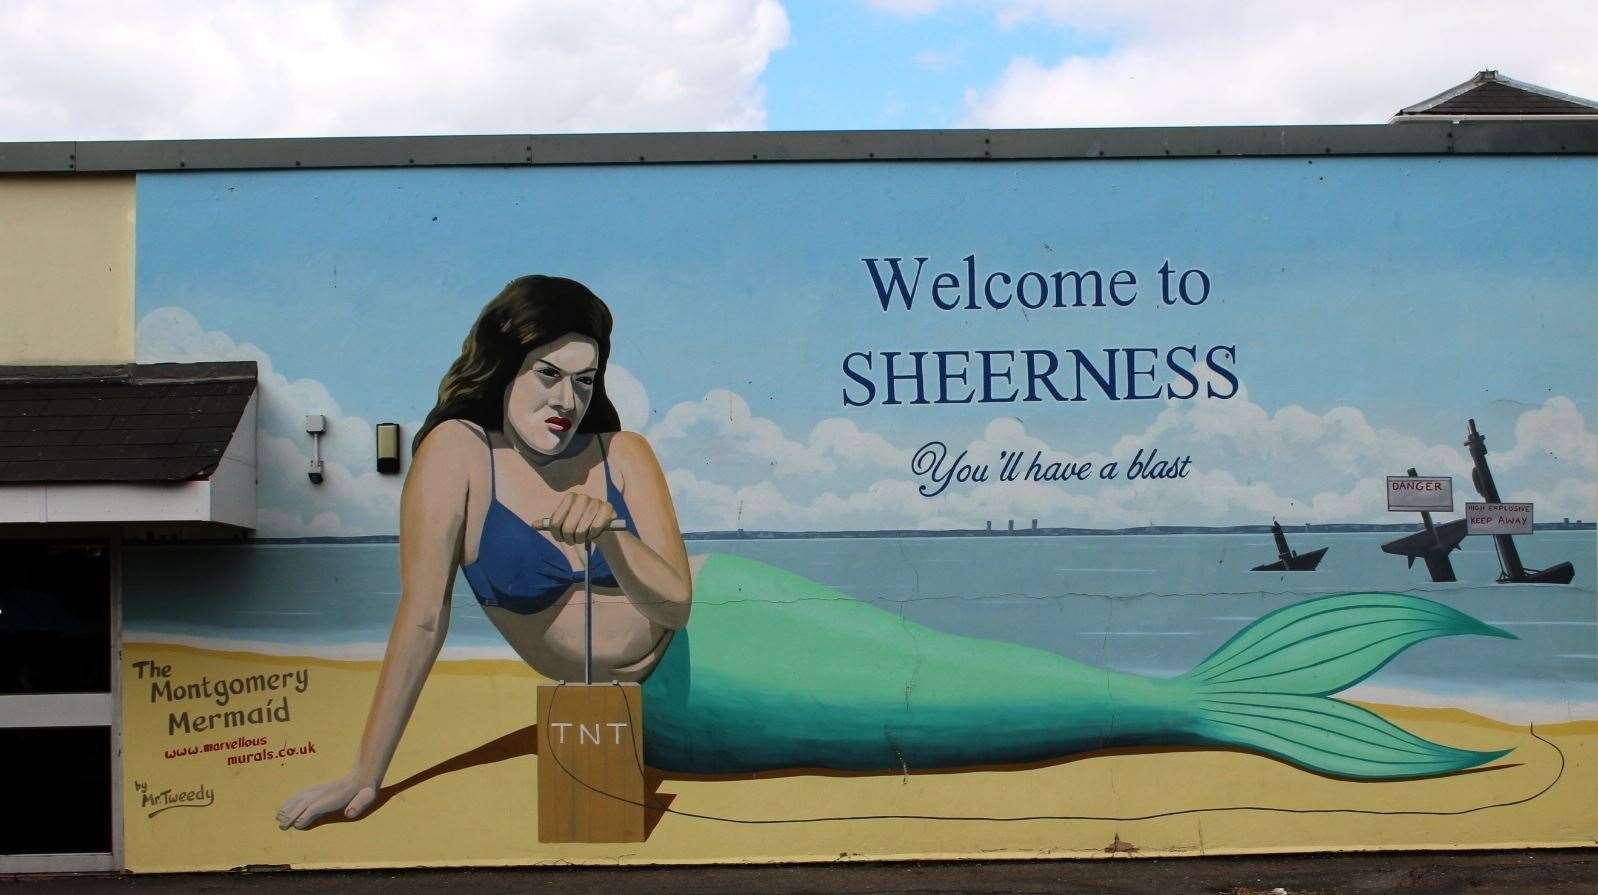 Have a blast: Dean Tweedy's controversial moody mermaid mural at Beachfields, Sheerness